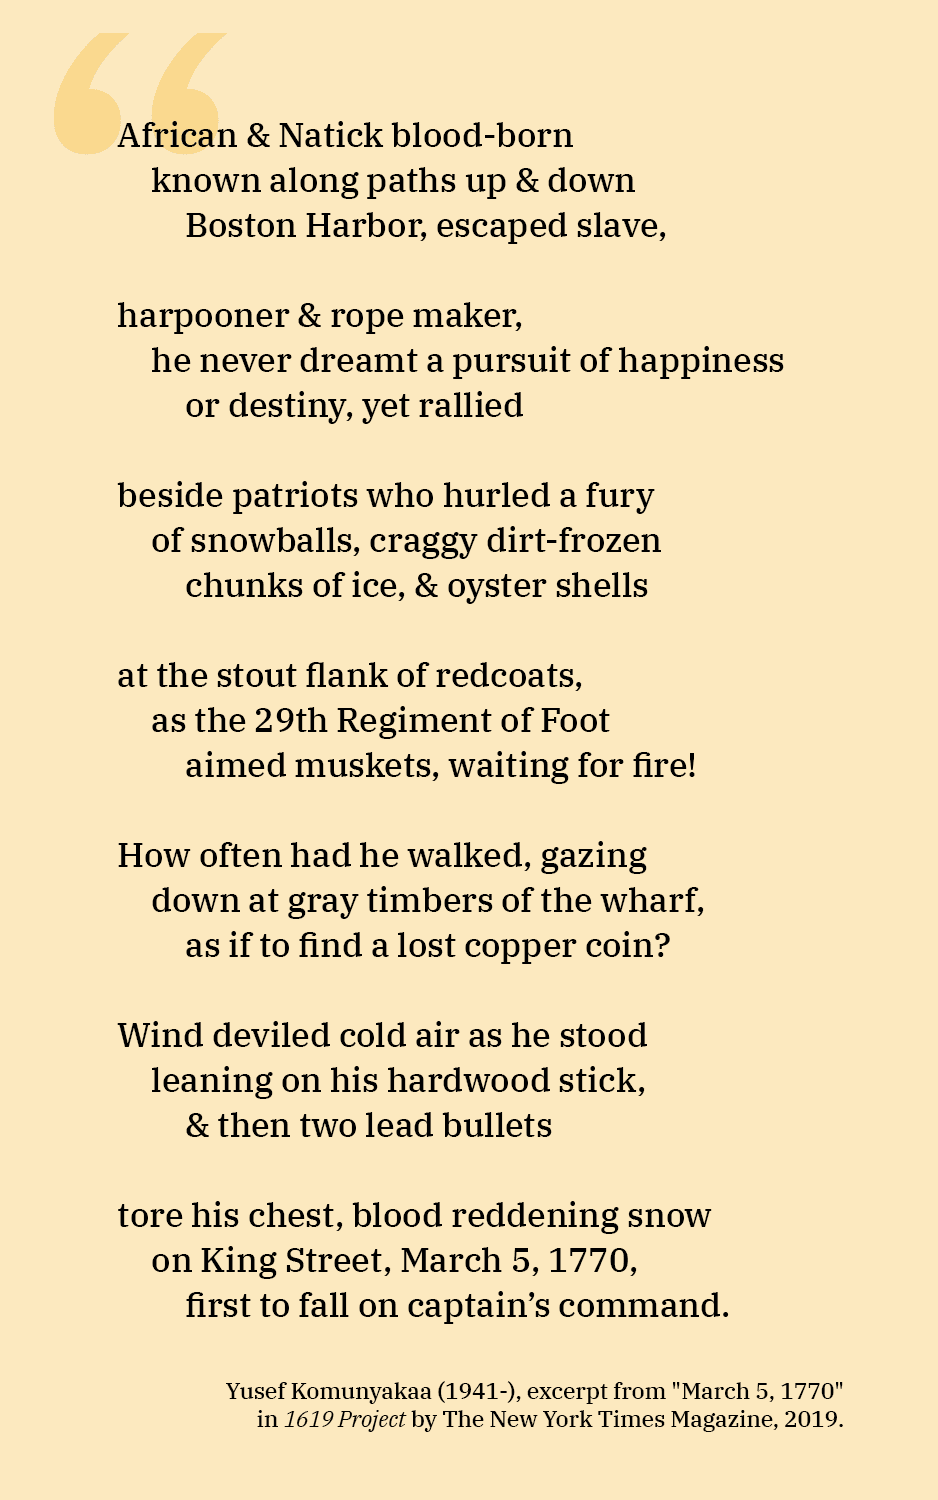 Poem by Yusef Komunyakaa